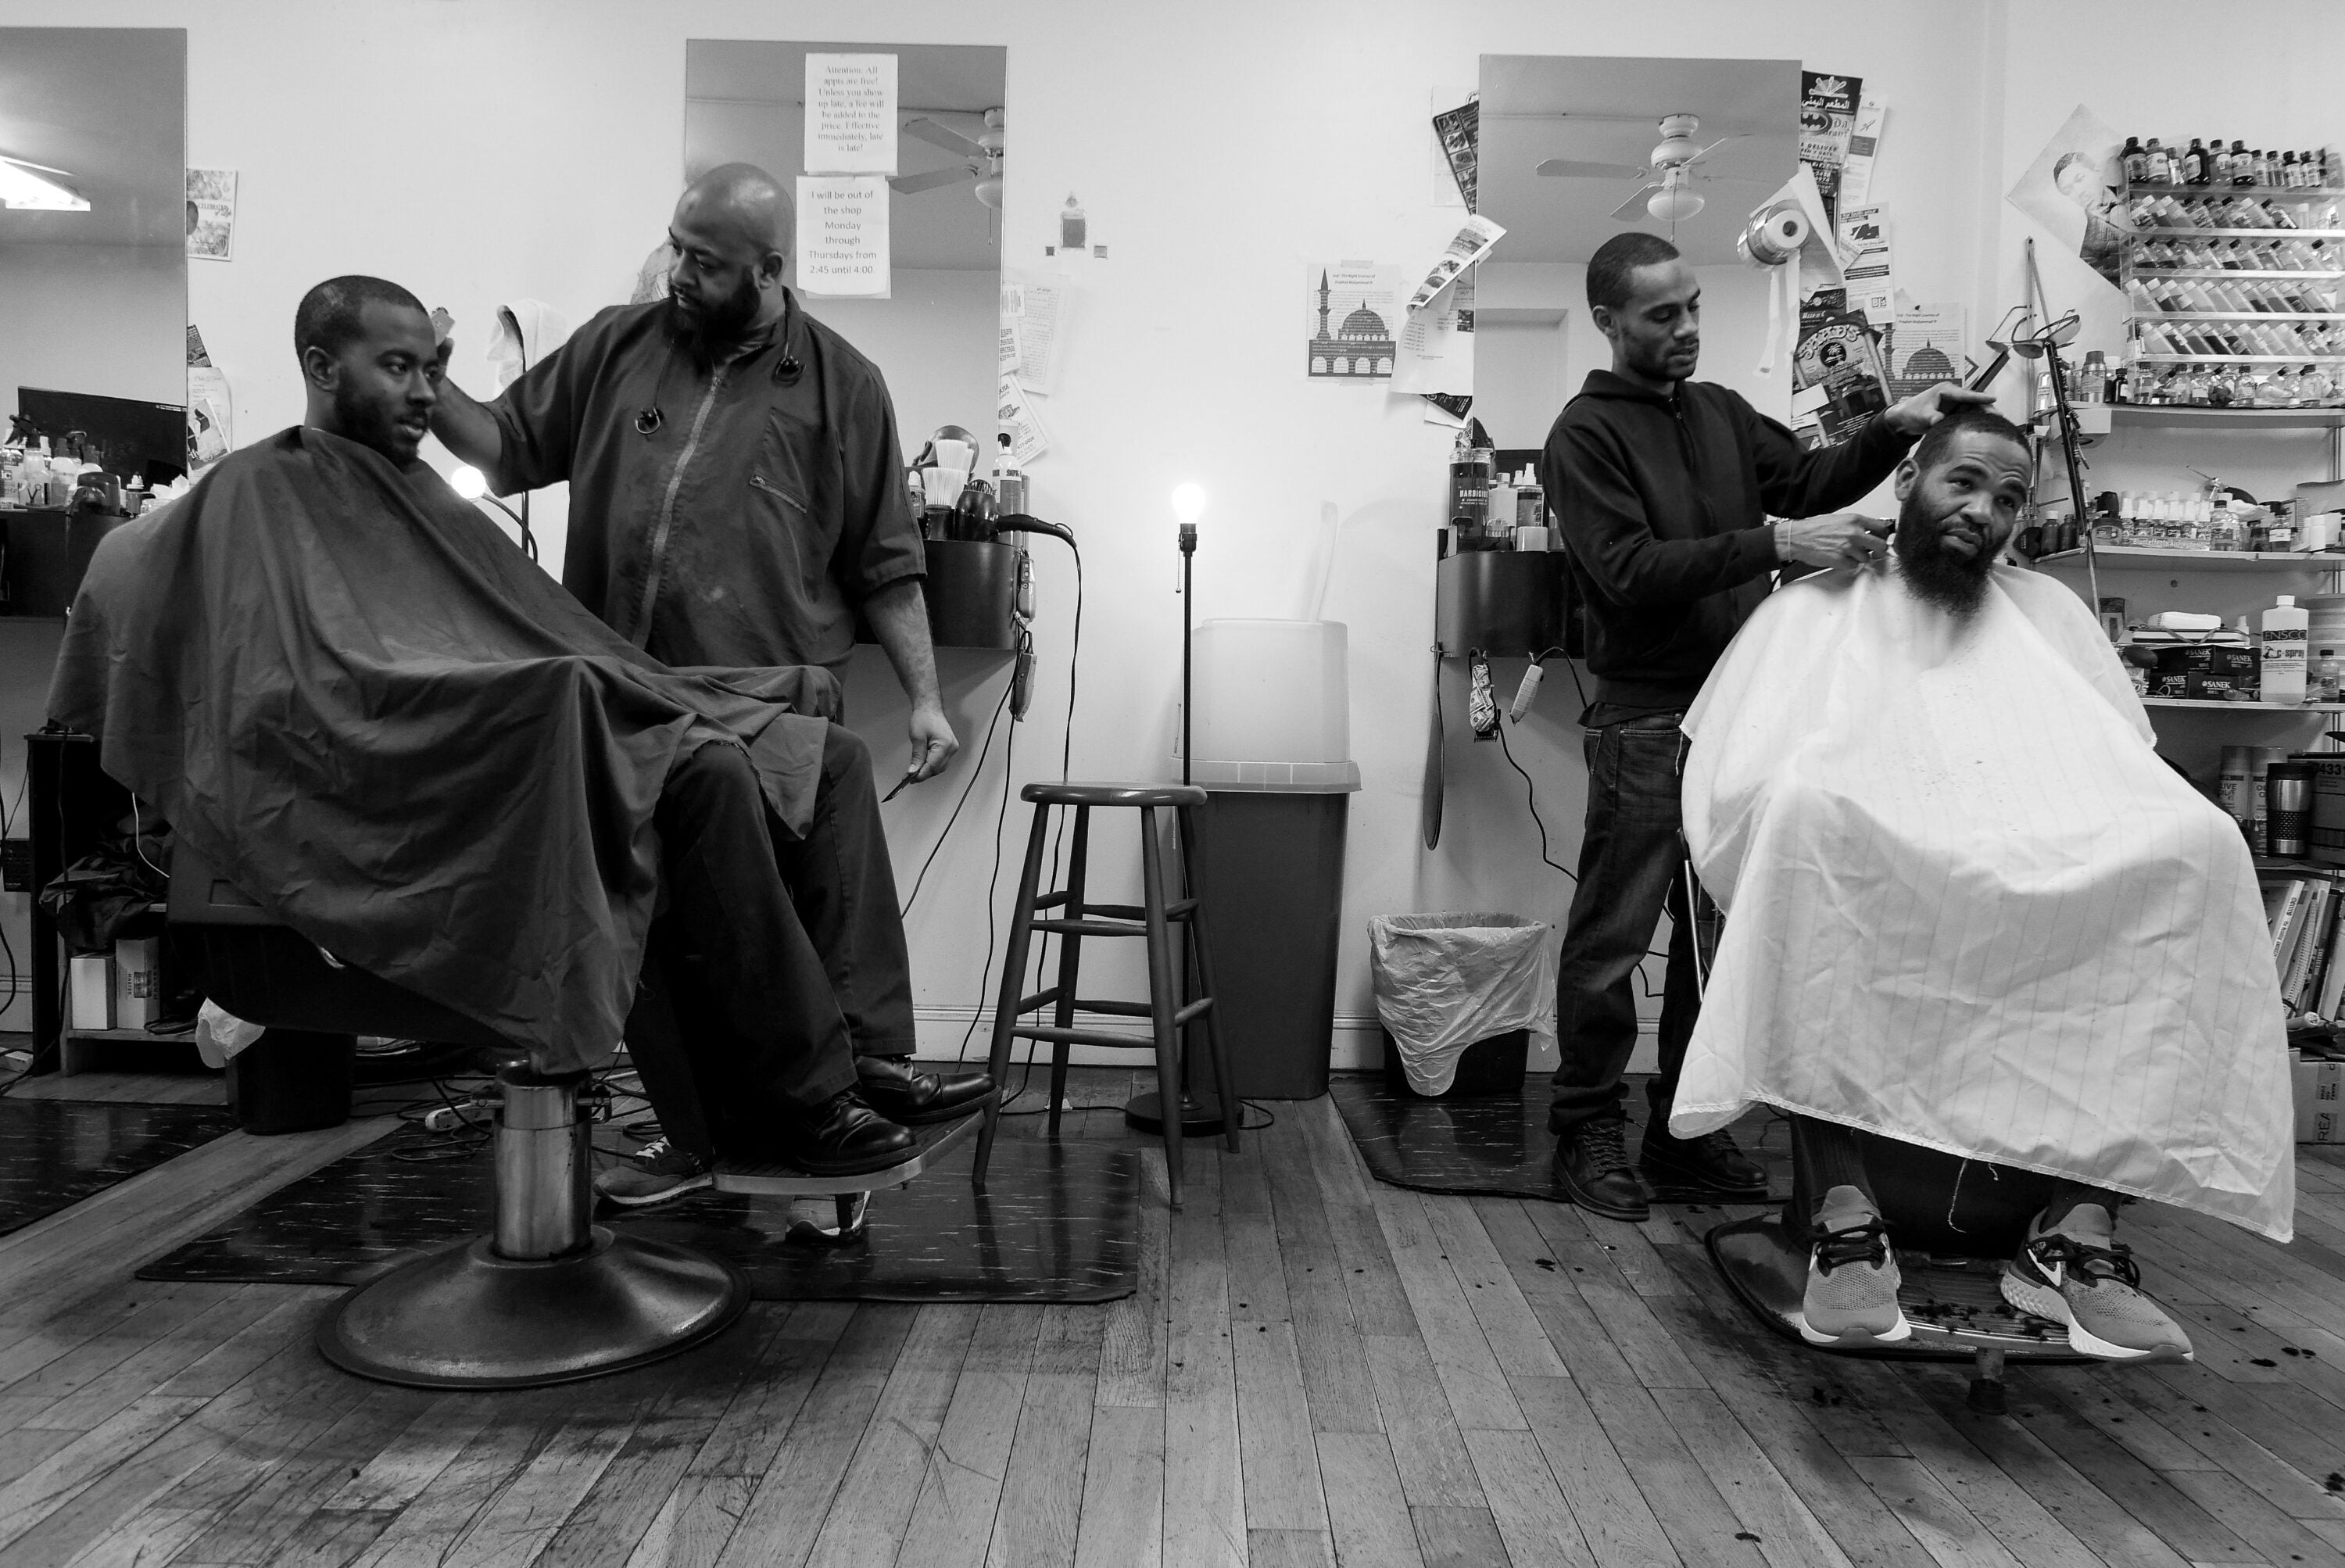 You Next: Inside a Philadelphia barber shop tradition